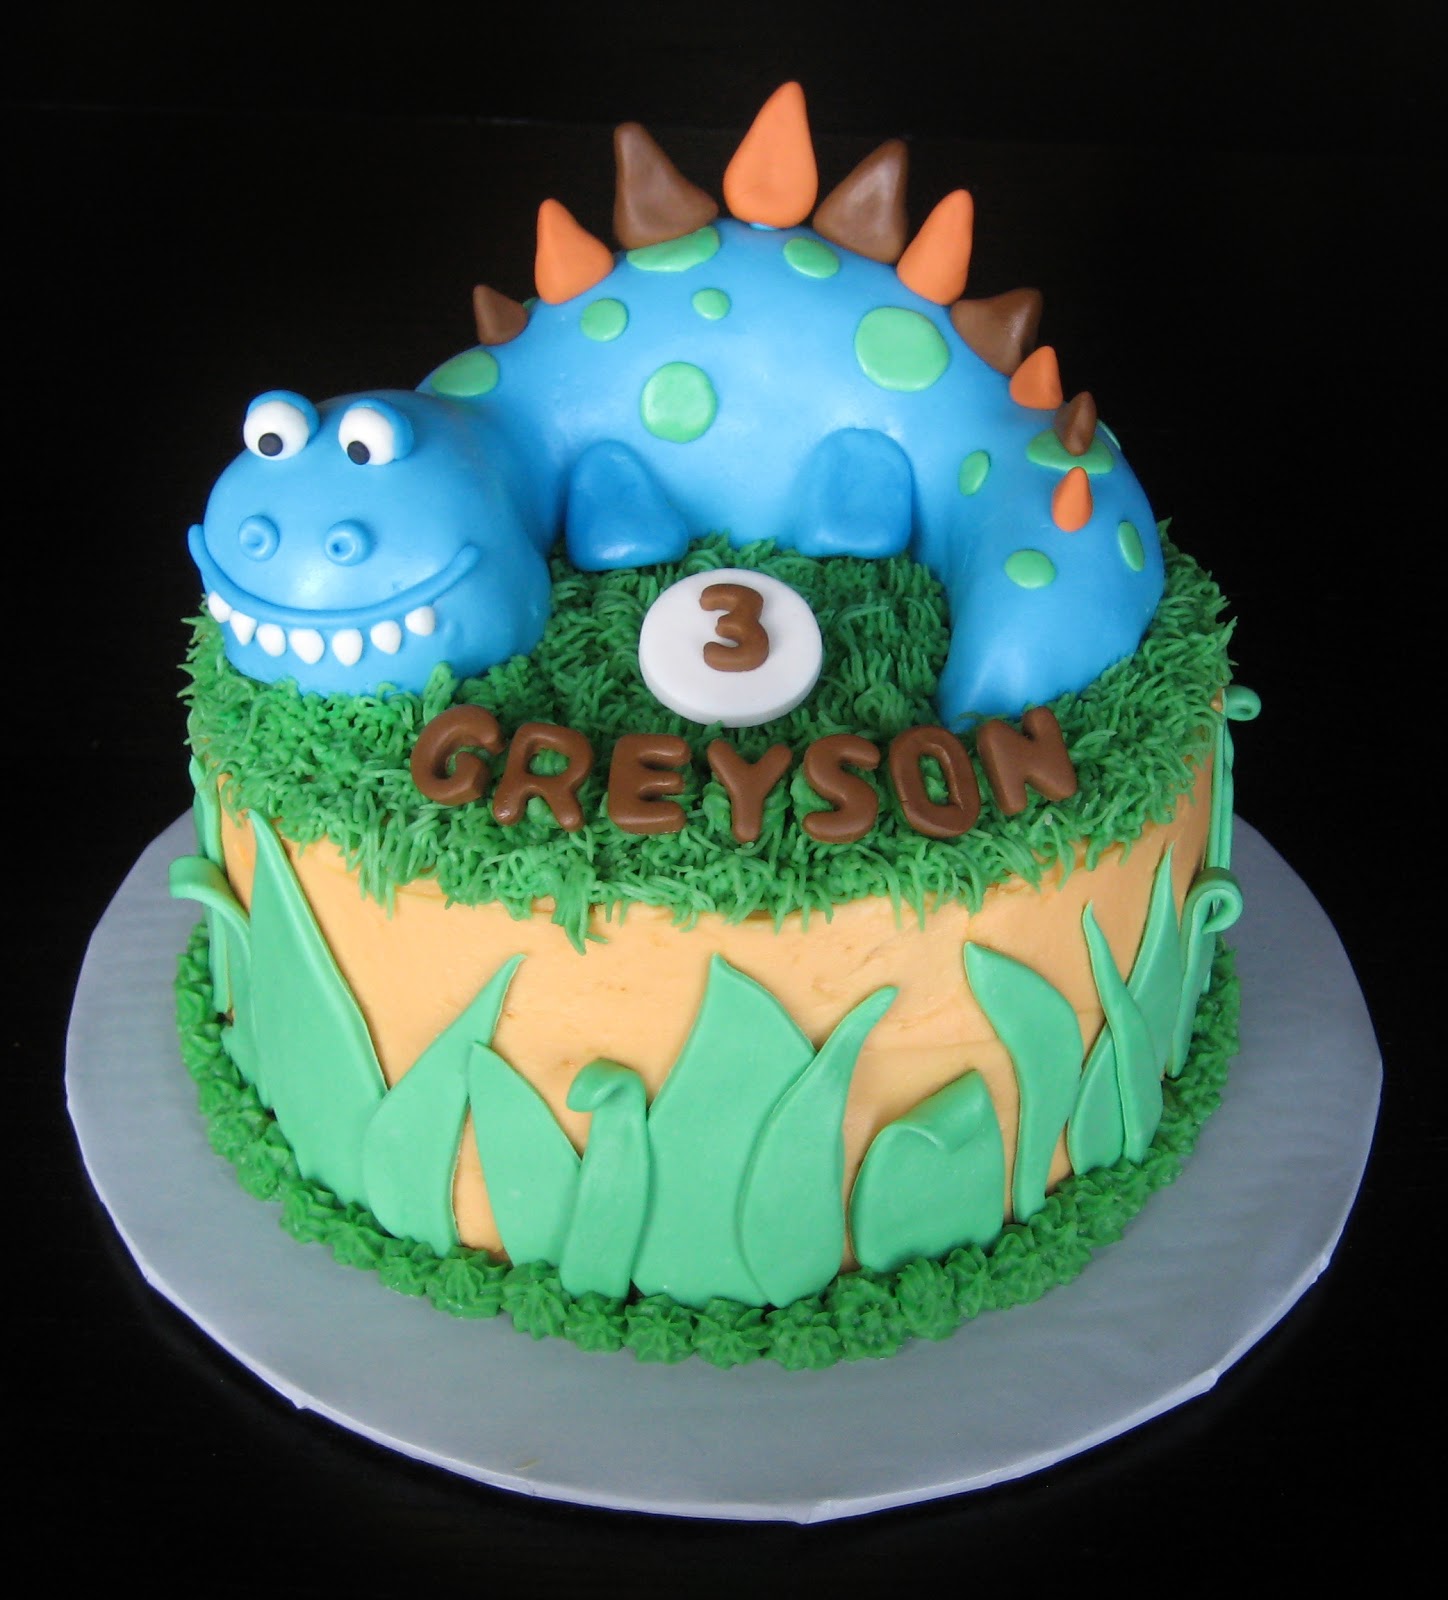 Custom Cakes by Julie: Dinosaur Cake III